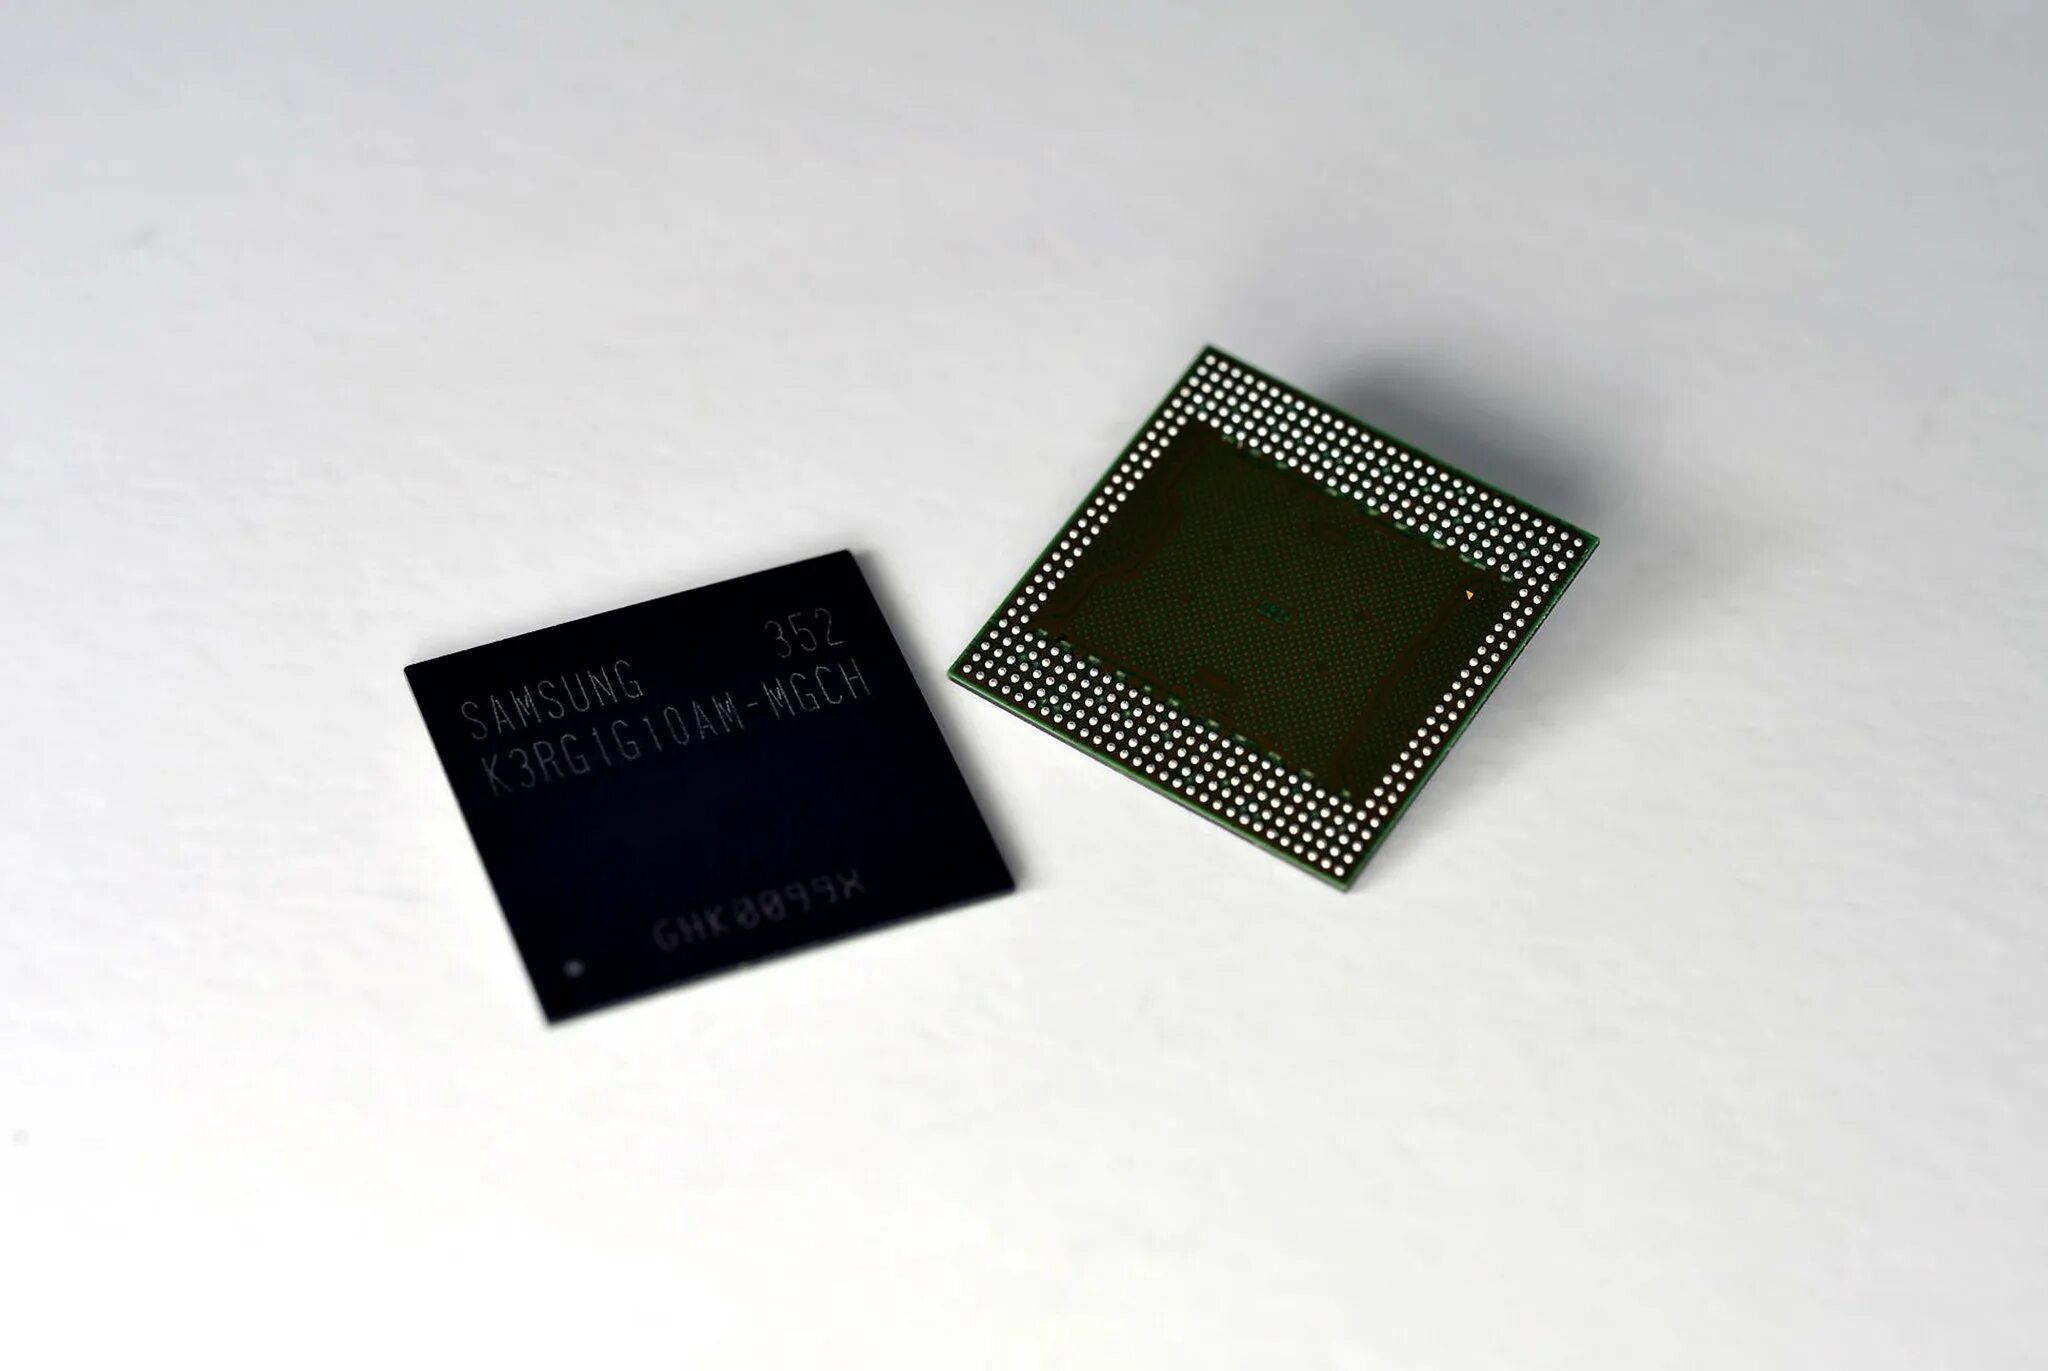 Samsung lpddr4. Чипы памяти Samsung. Чип памяти gddr5 Hynix. Micron lpddr4.